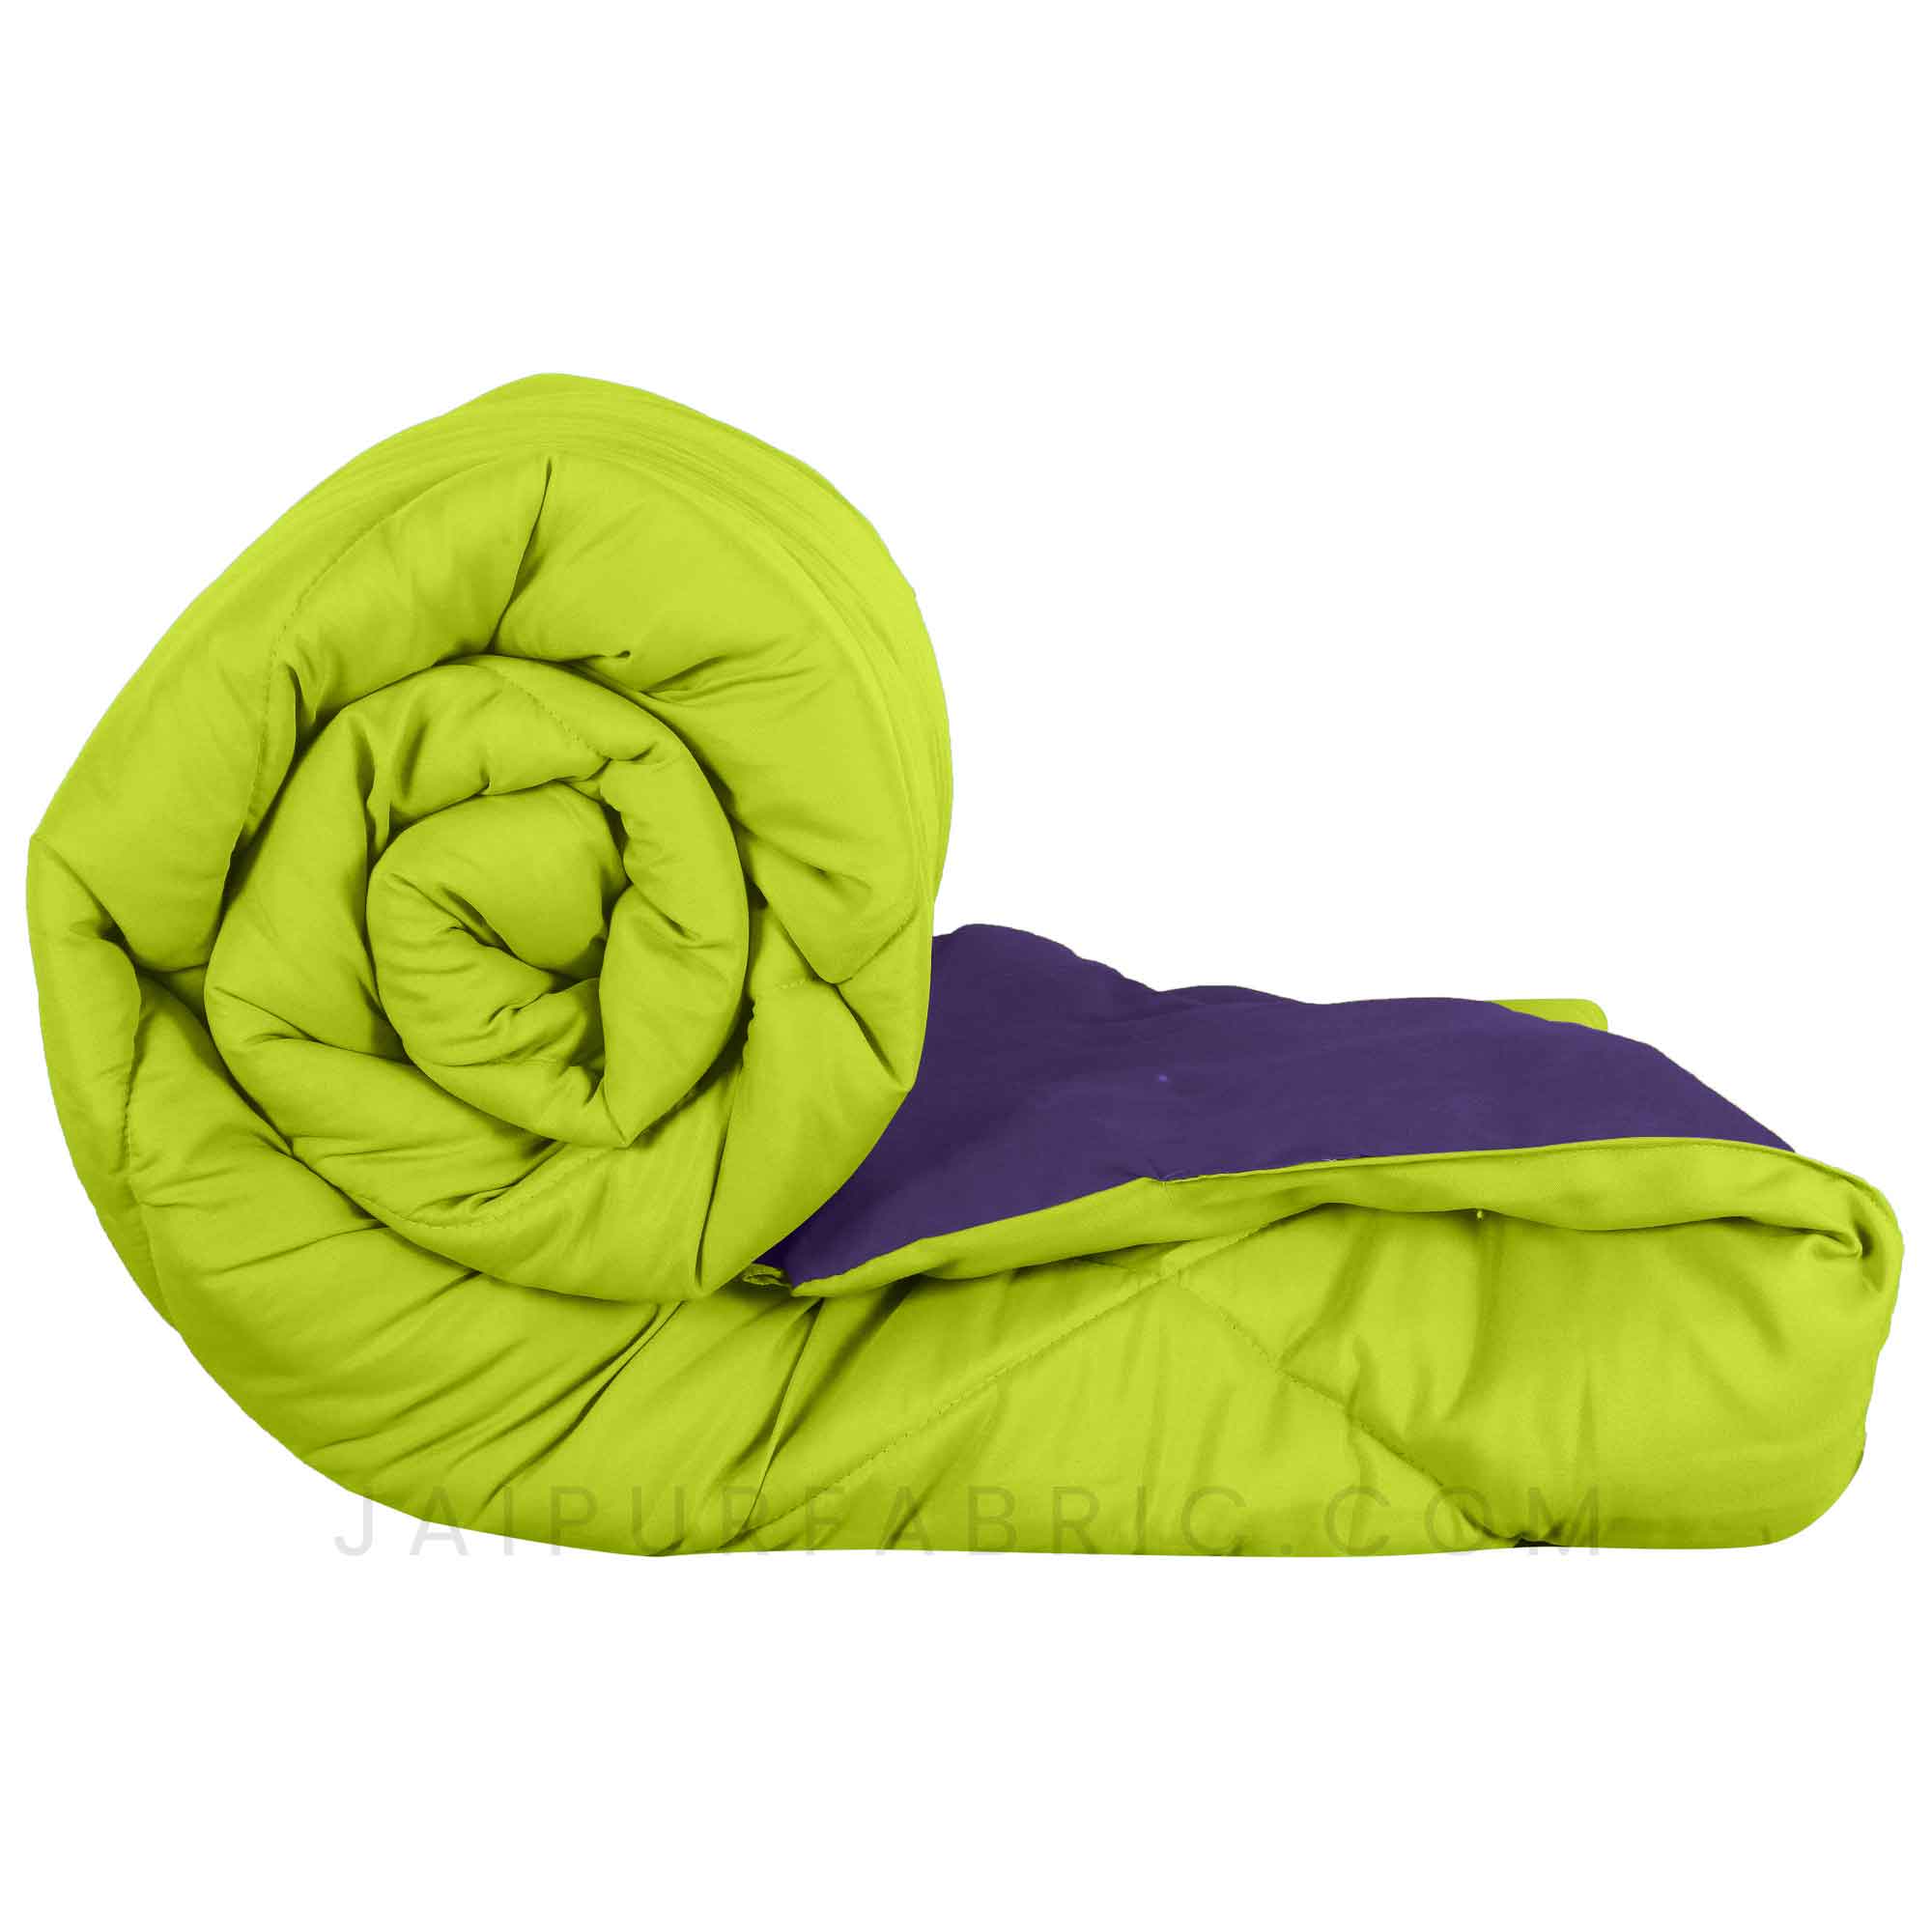 Purple Green Single Bed Comforter